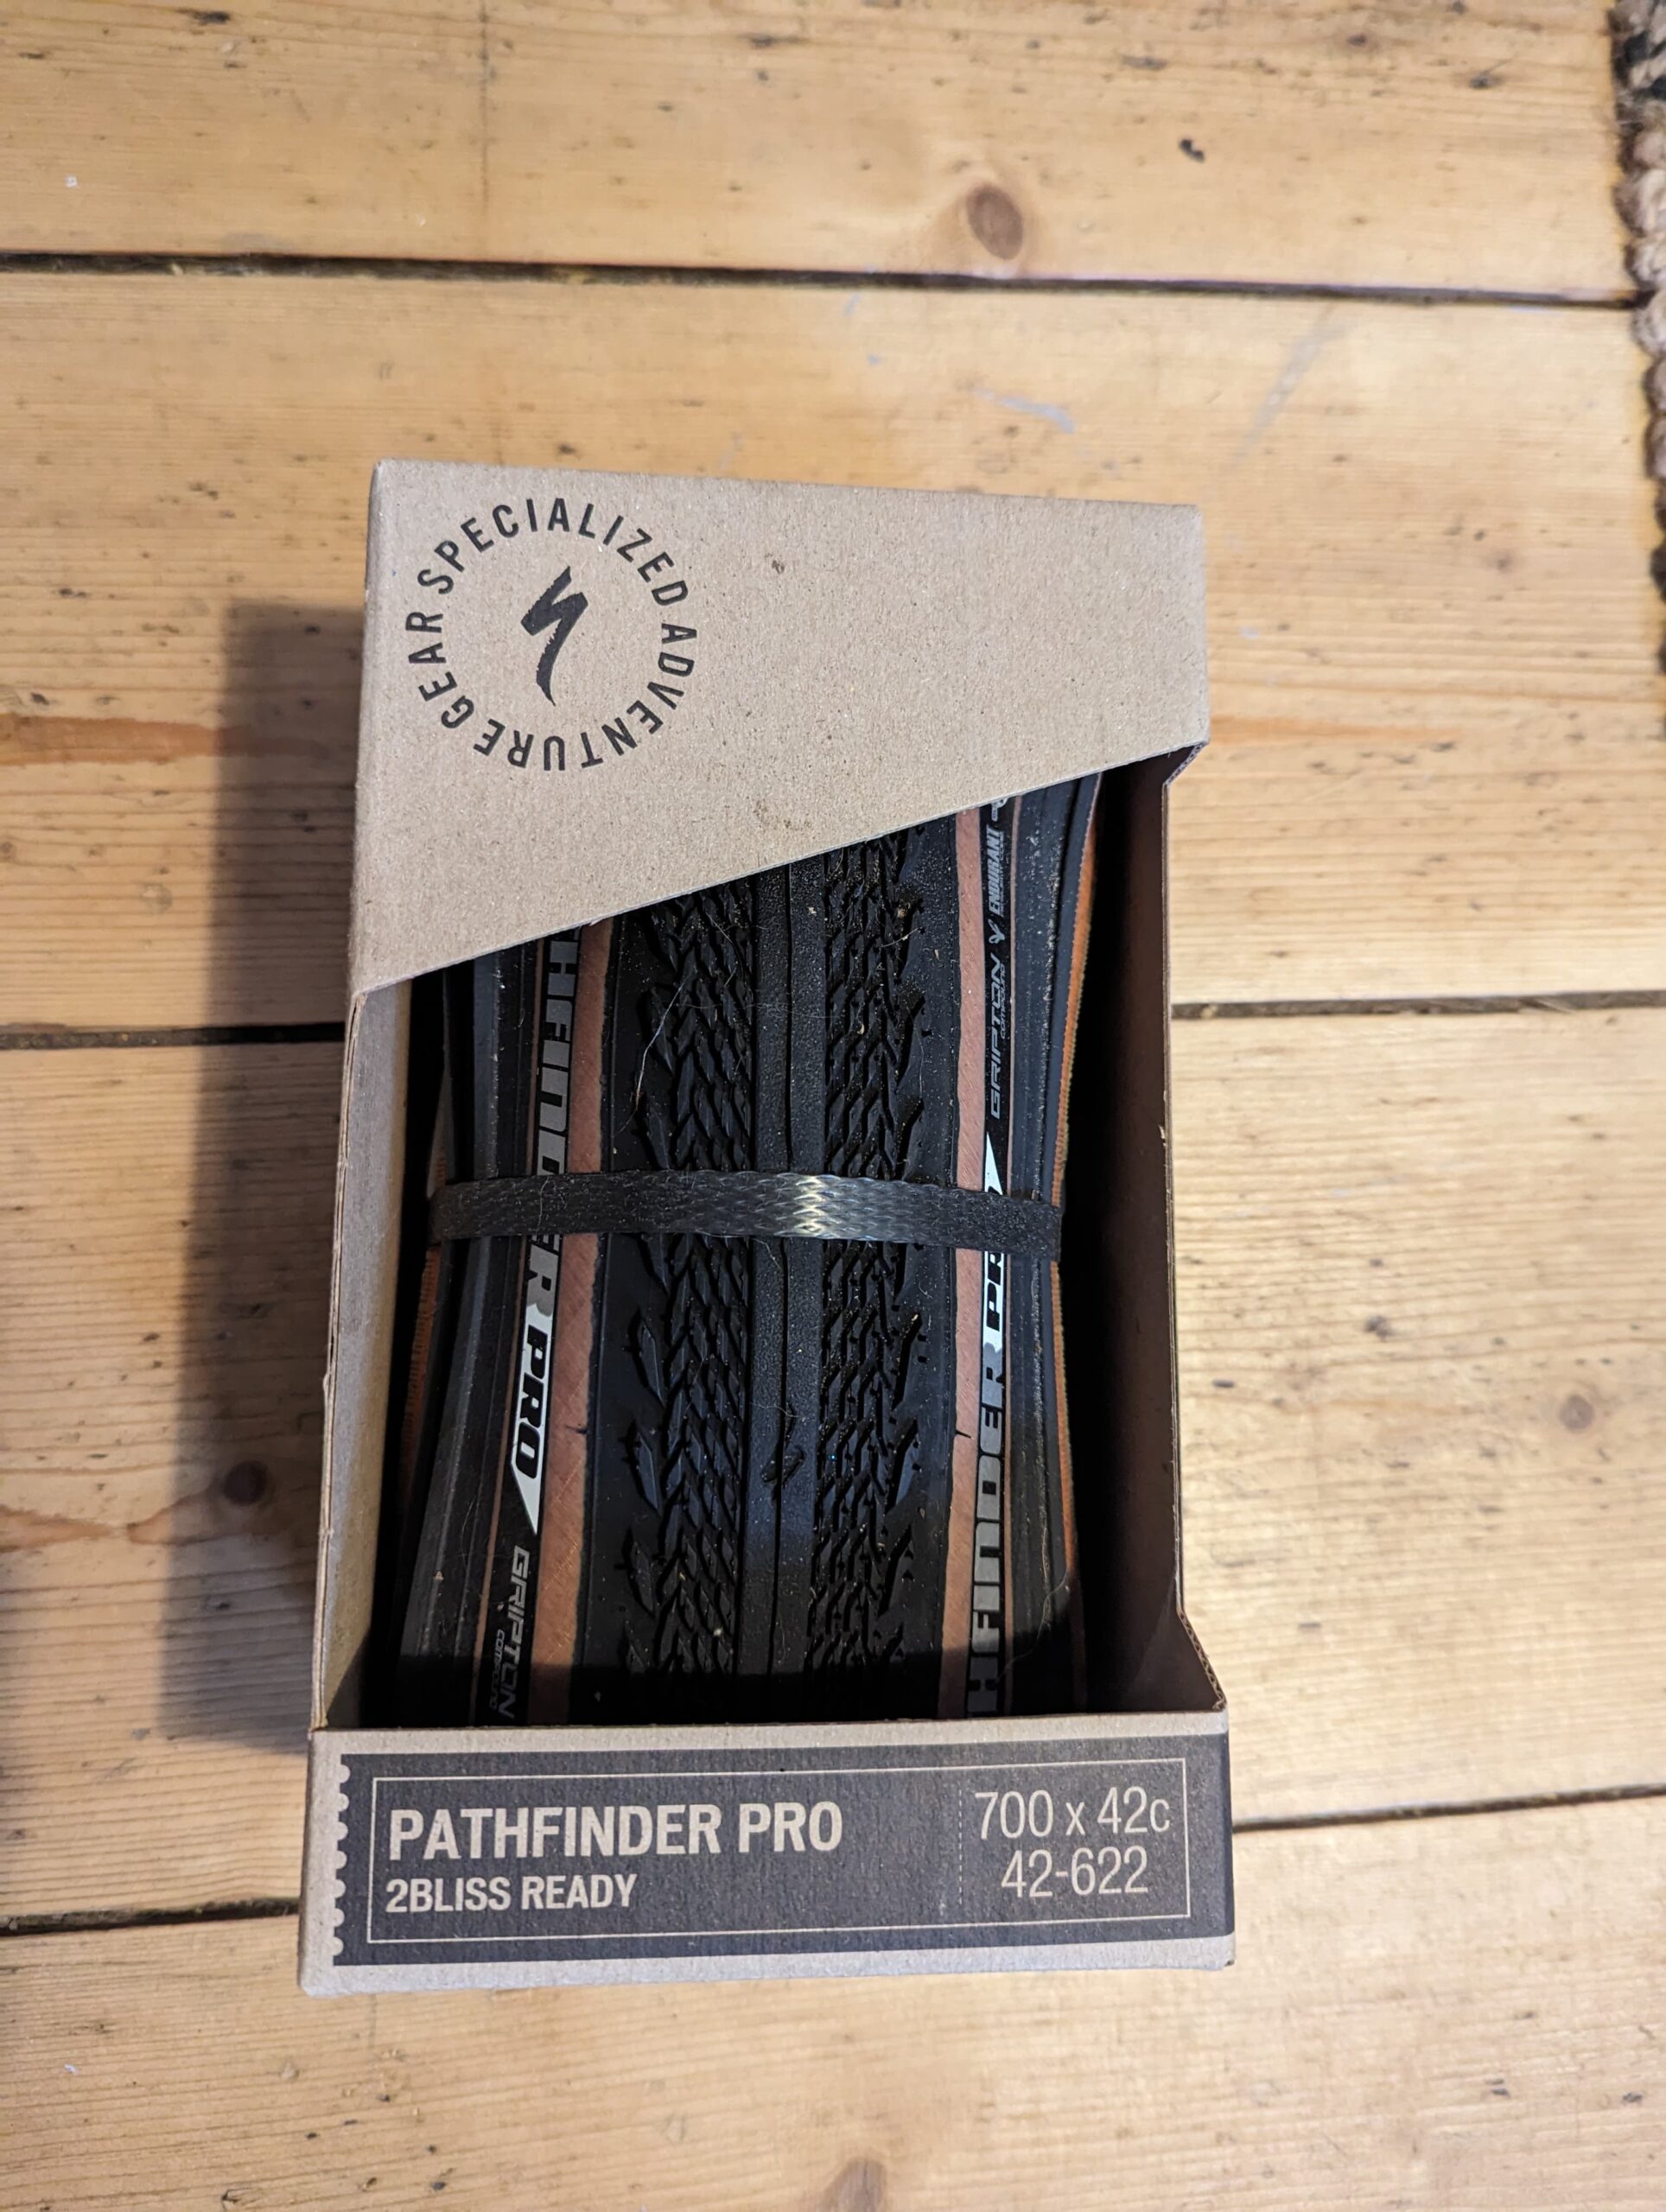 Pathfinder Pro tyres in their packaging